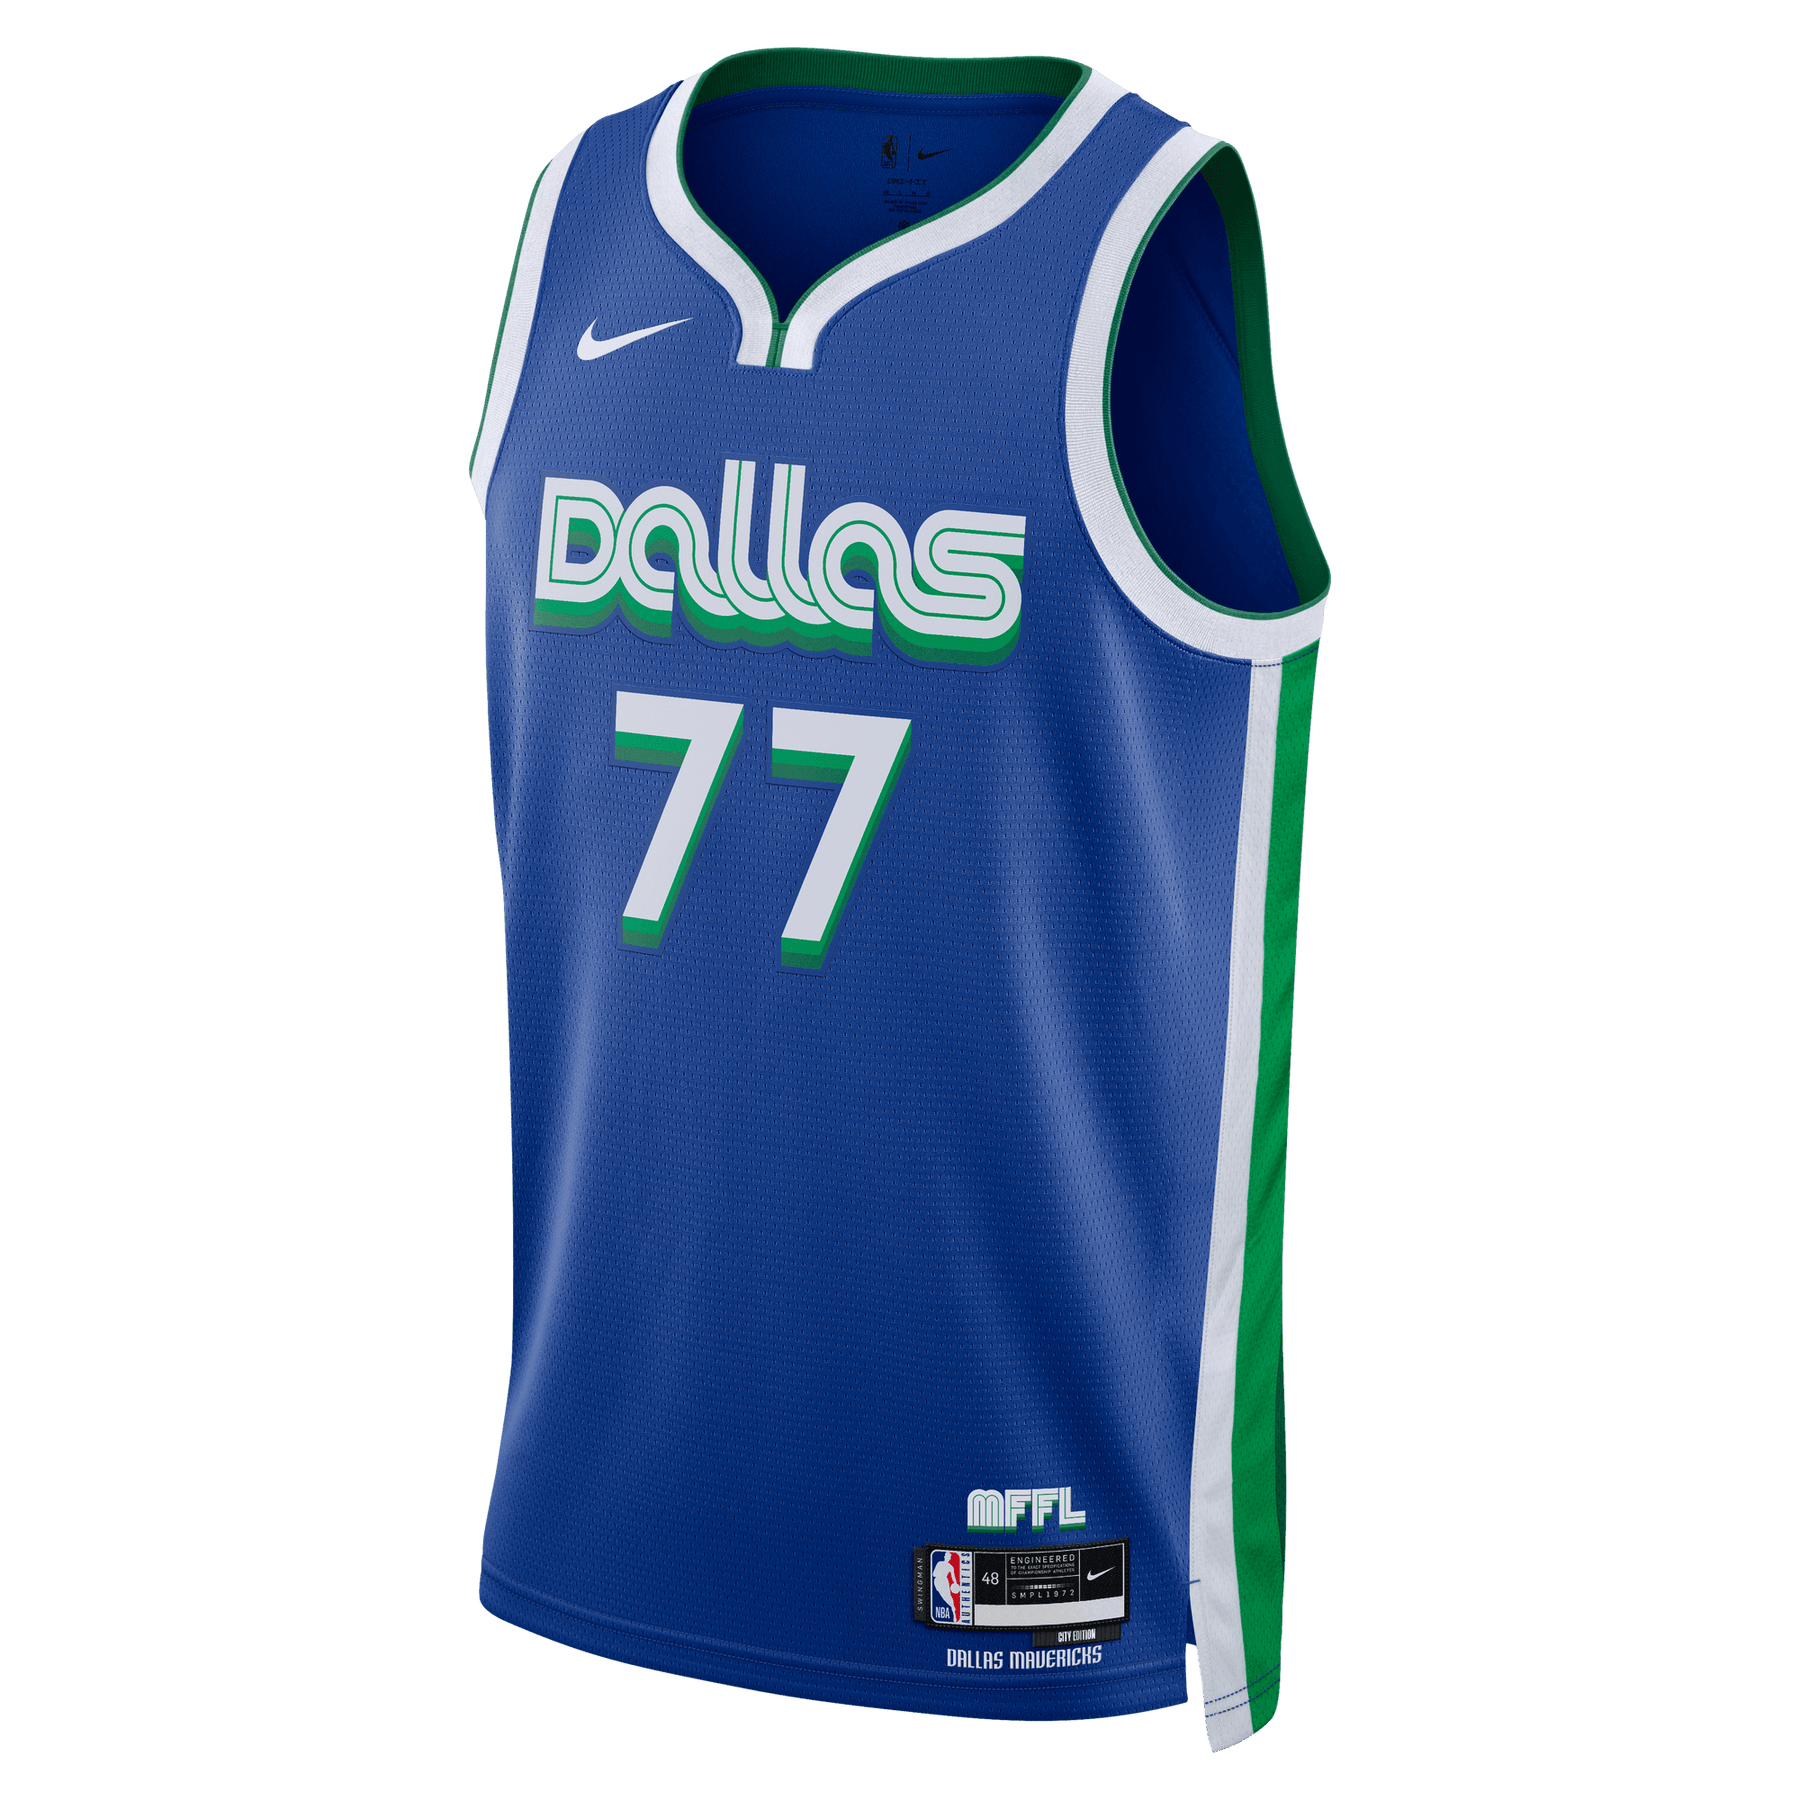 Youth Nike Luka Doncic White Dallas Mavericks 2021/22 Swingman